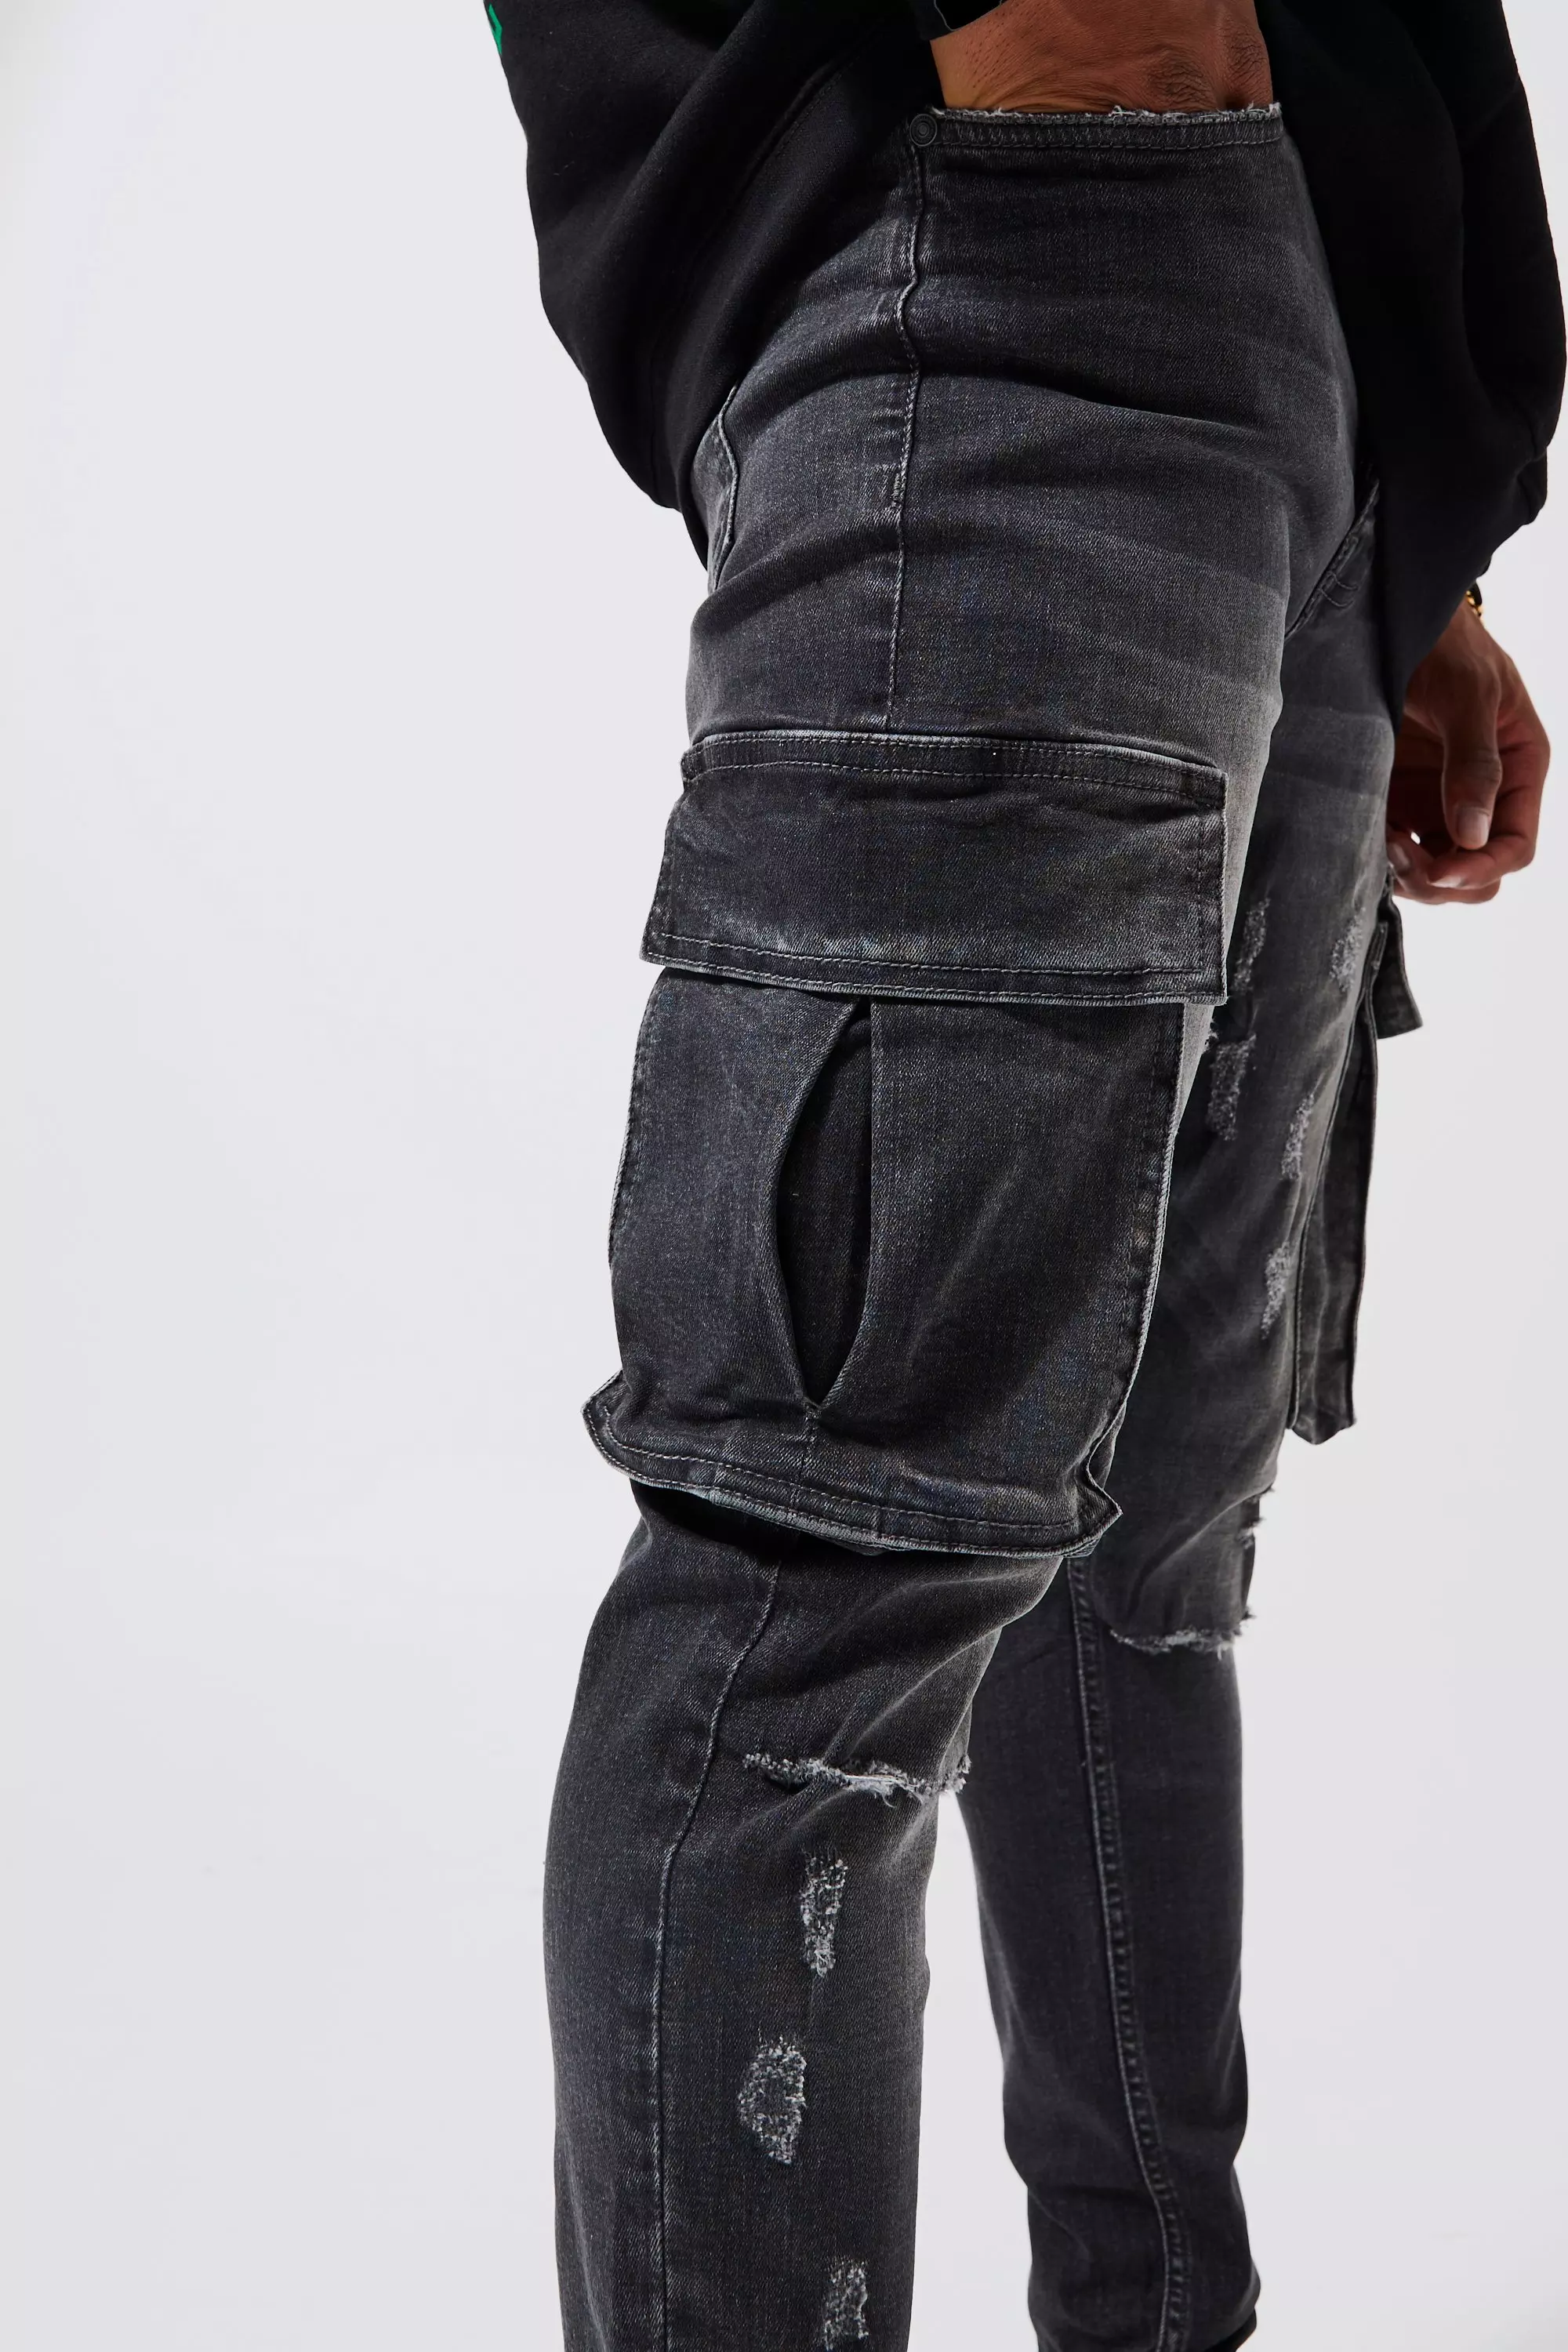 Bomotoo Men Stylish Ripped Jeans Pants Biker Skinny Slim Straight Denim  Trousers with Pockets 